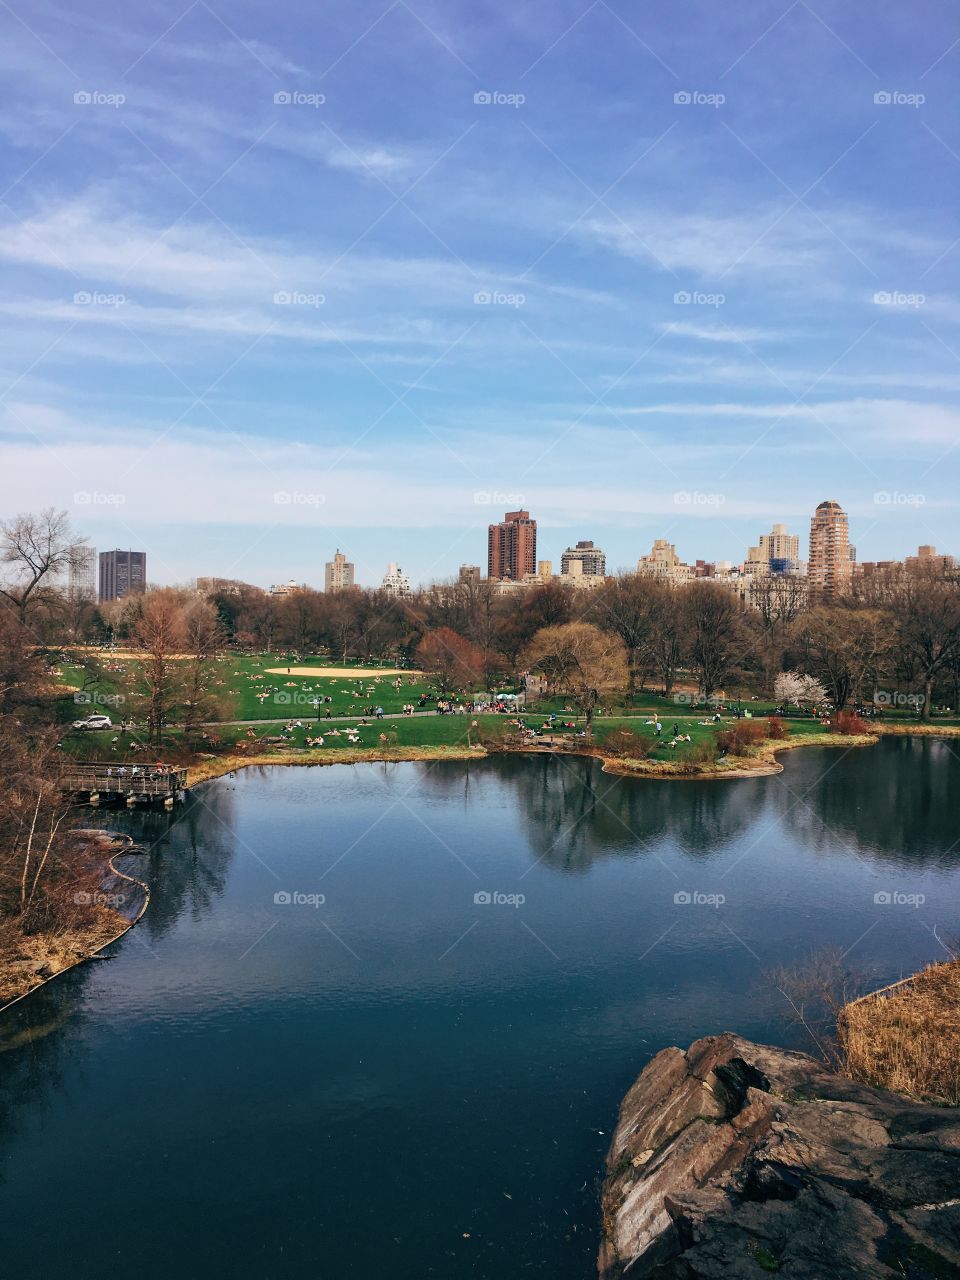 Spring days in Central Park